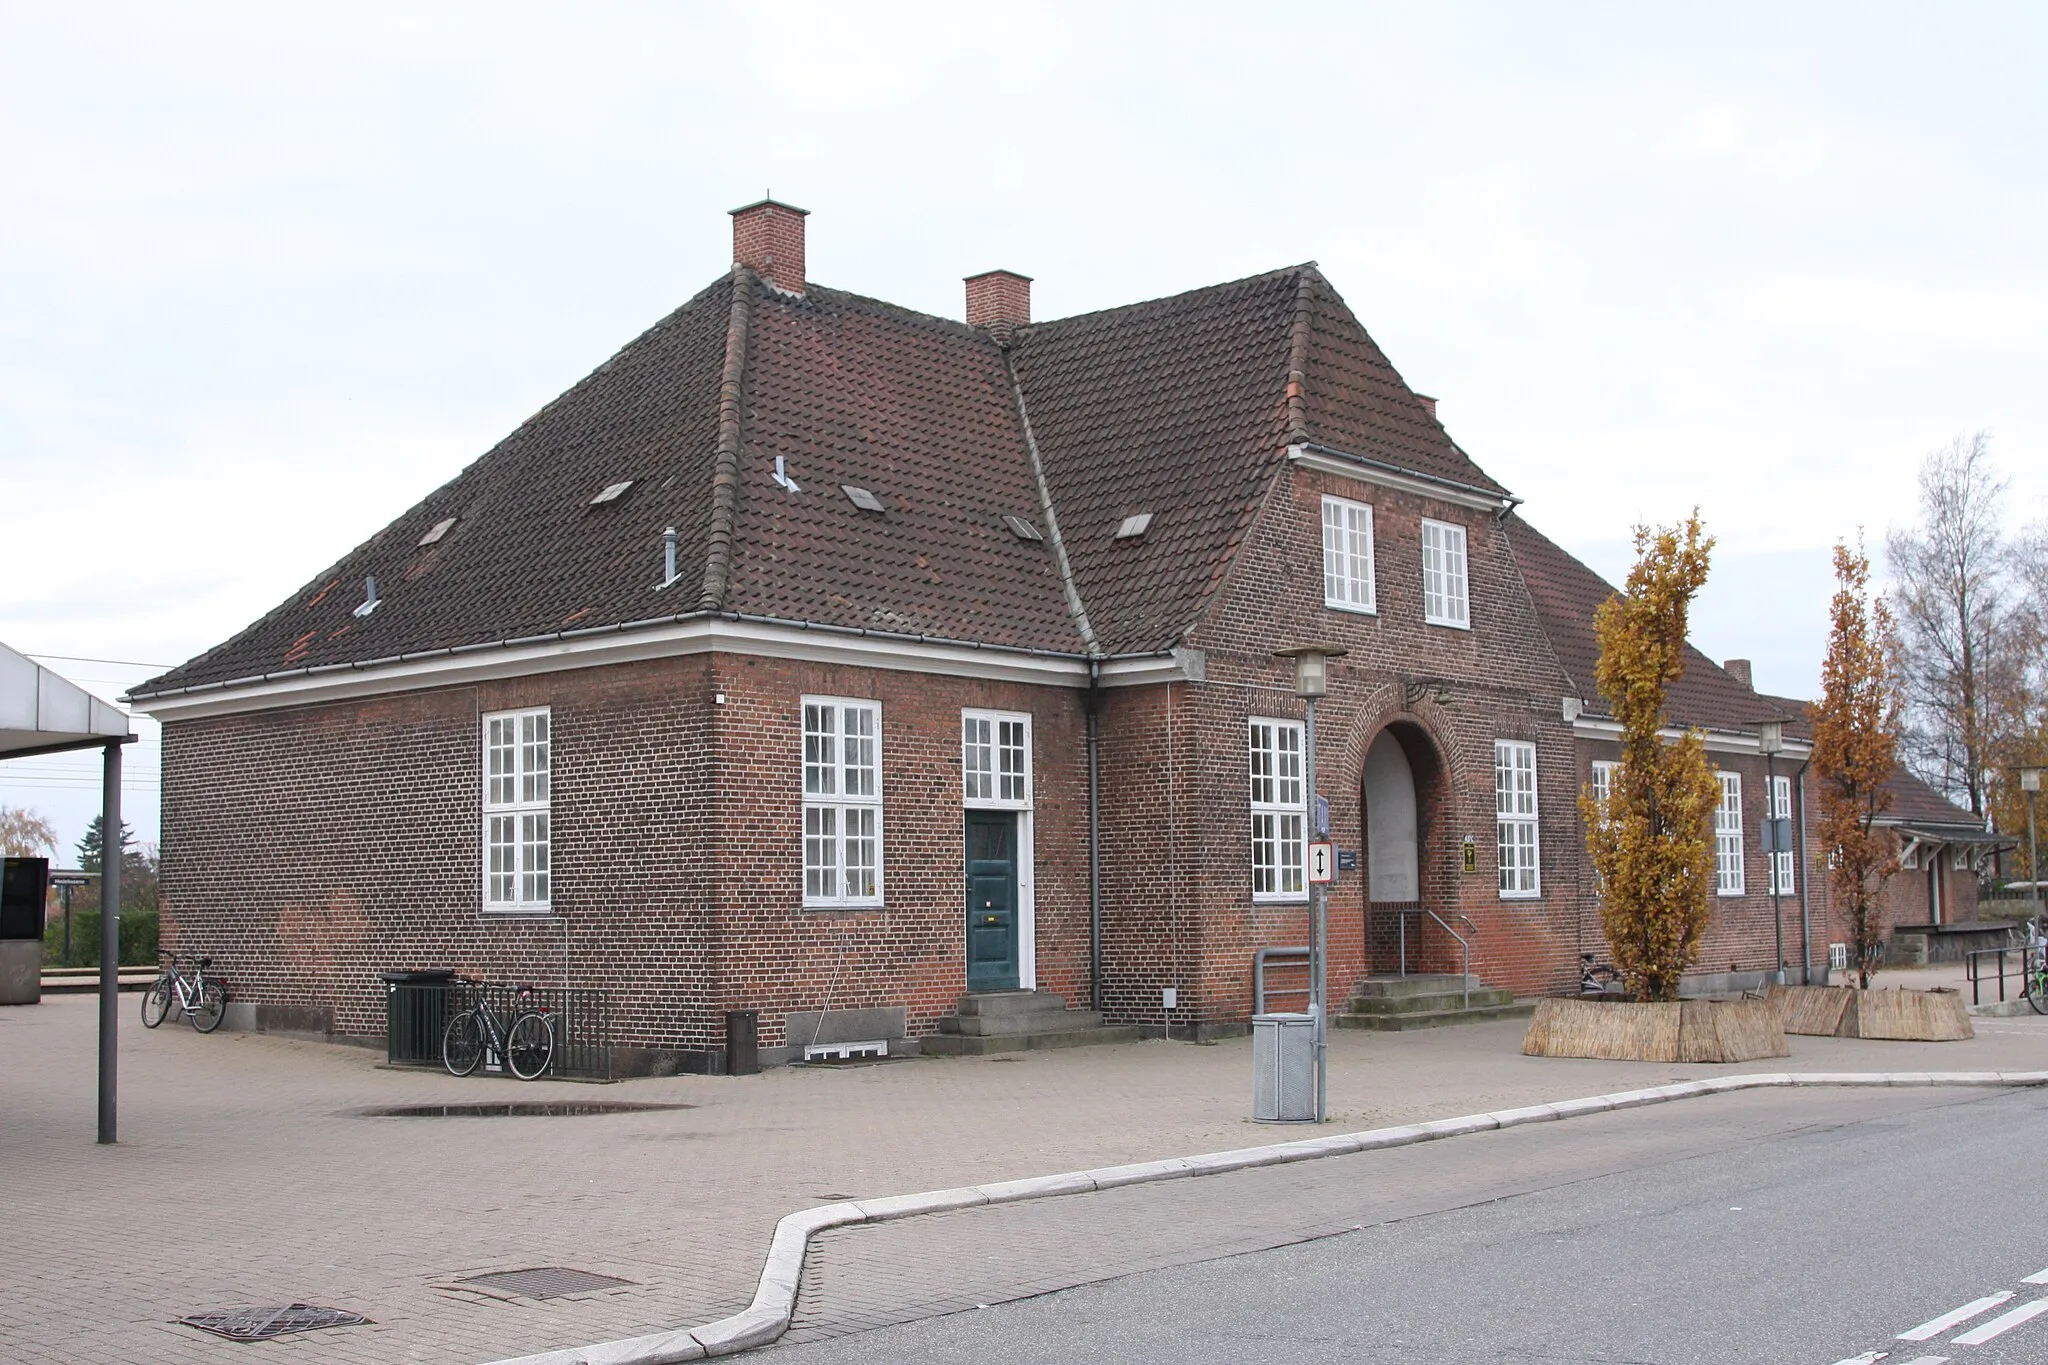 Photo showing: The train station in Hedehusene, Denmark.